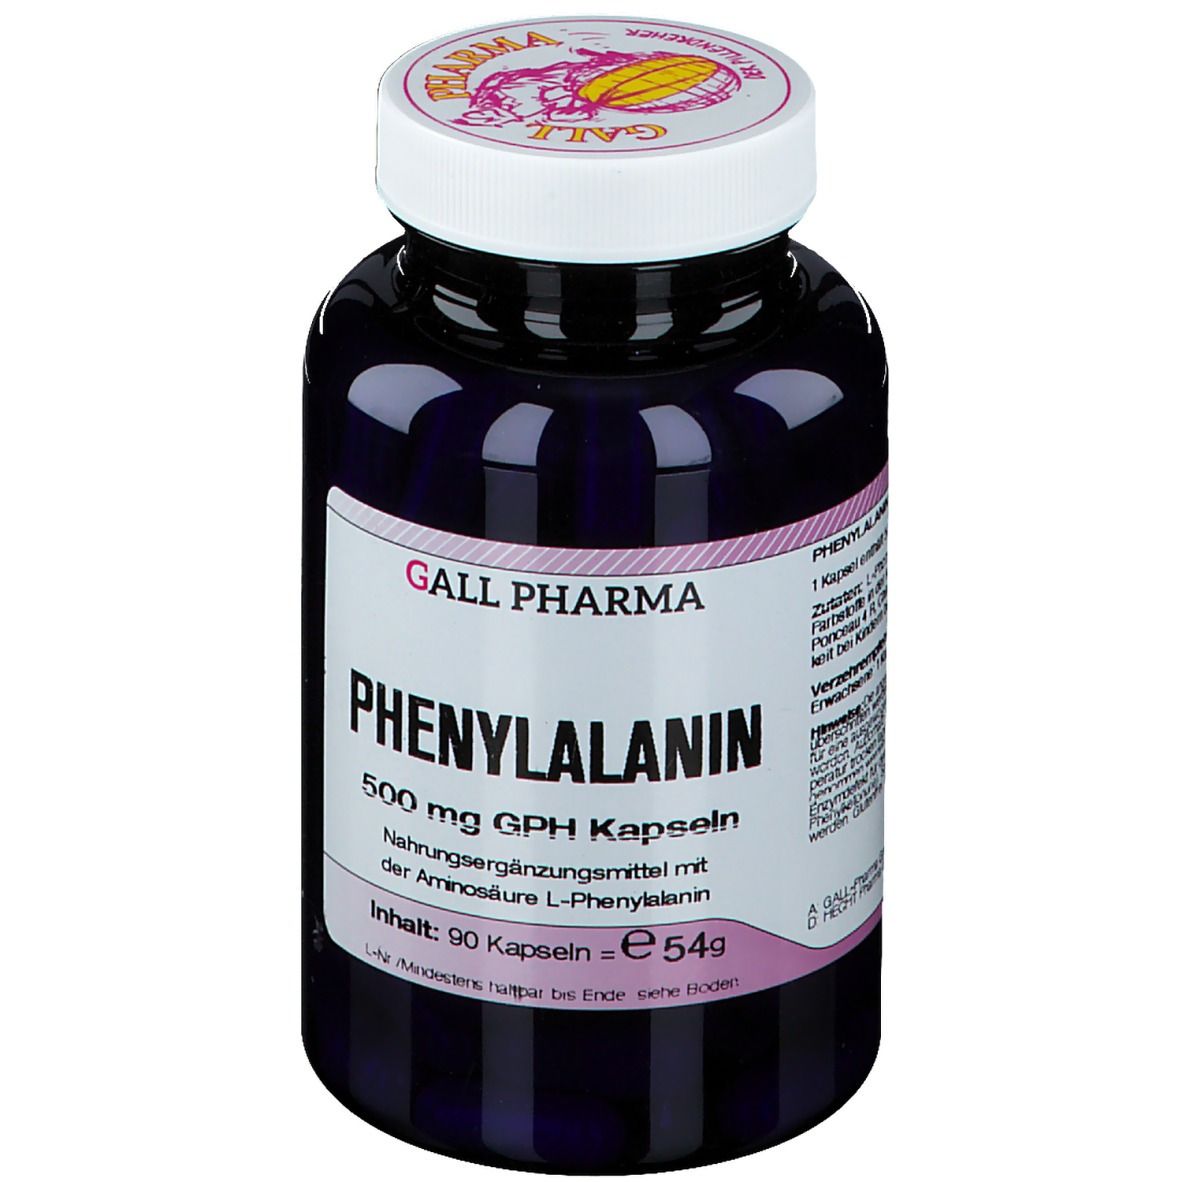 GALL PHARMA Phenylalanin 500 mg GPH